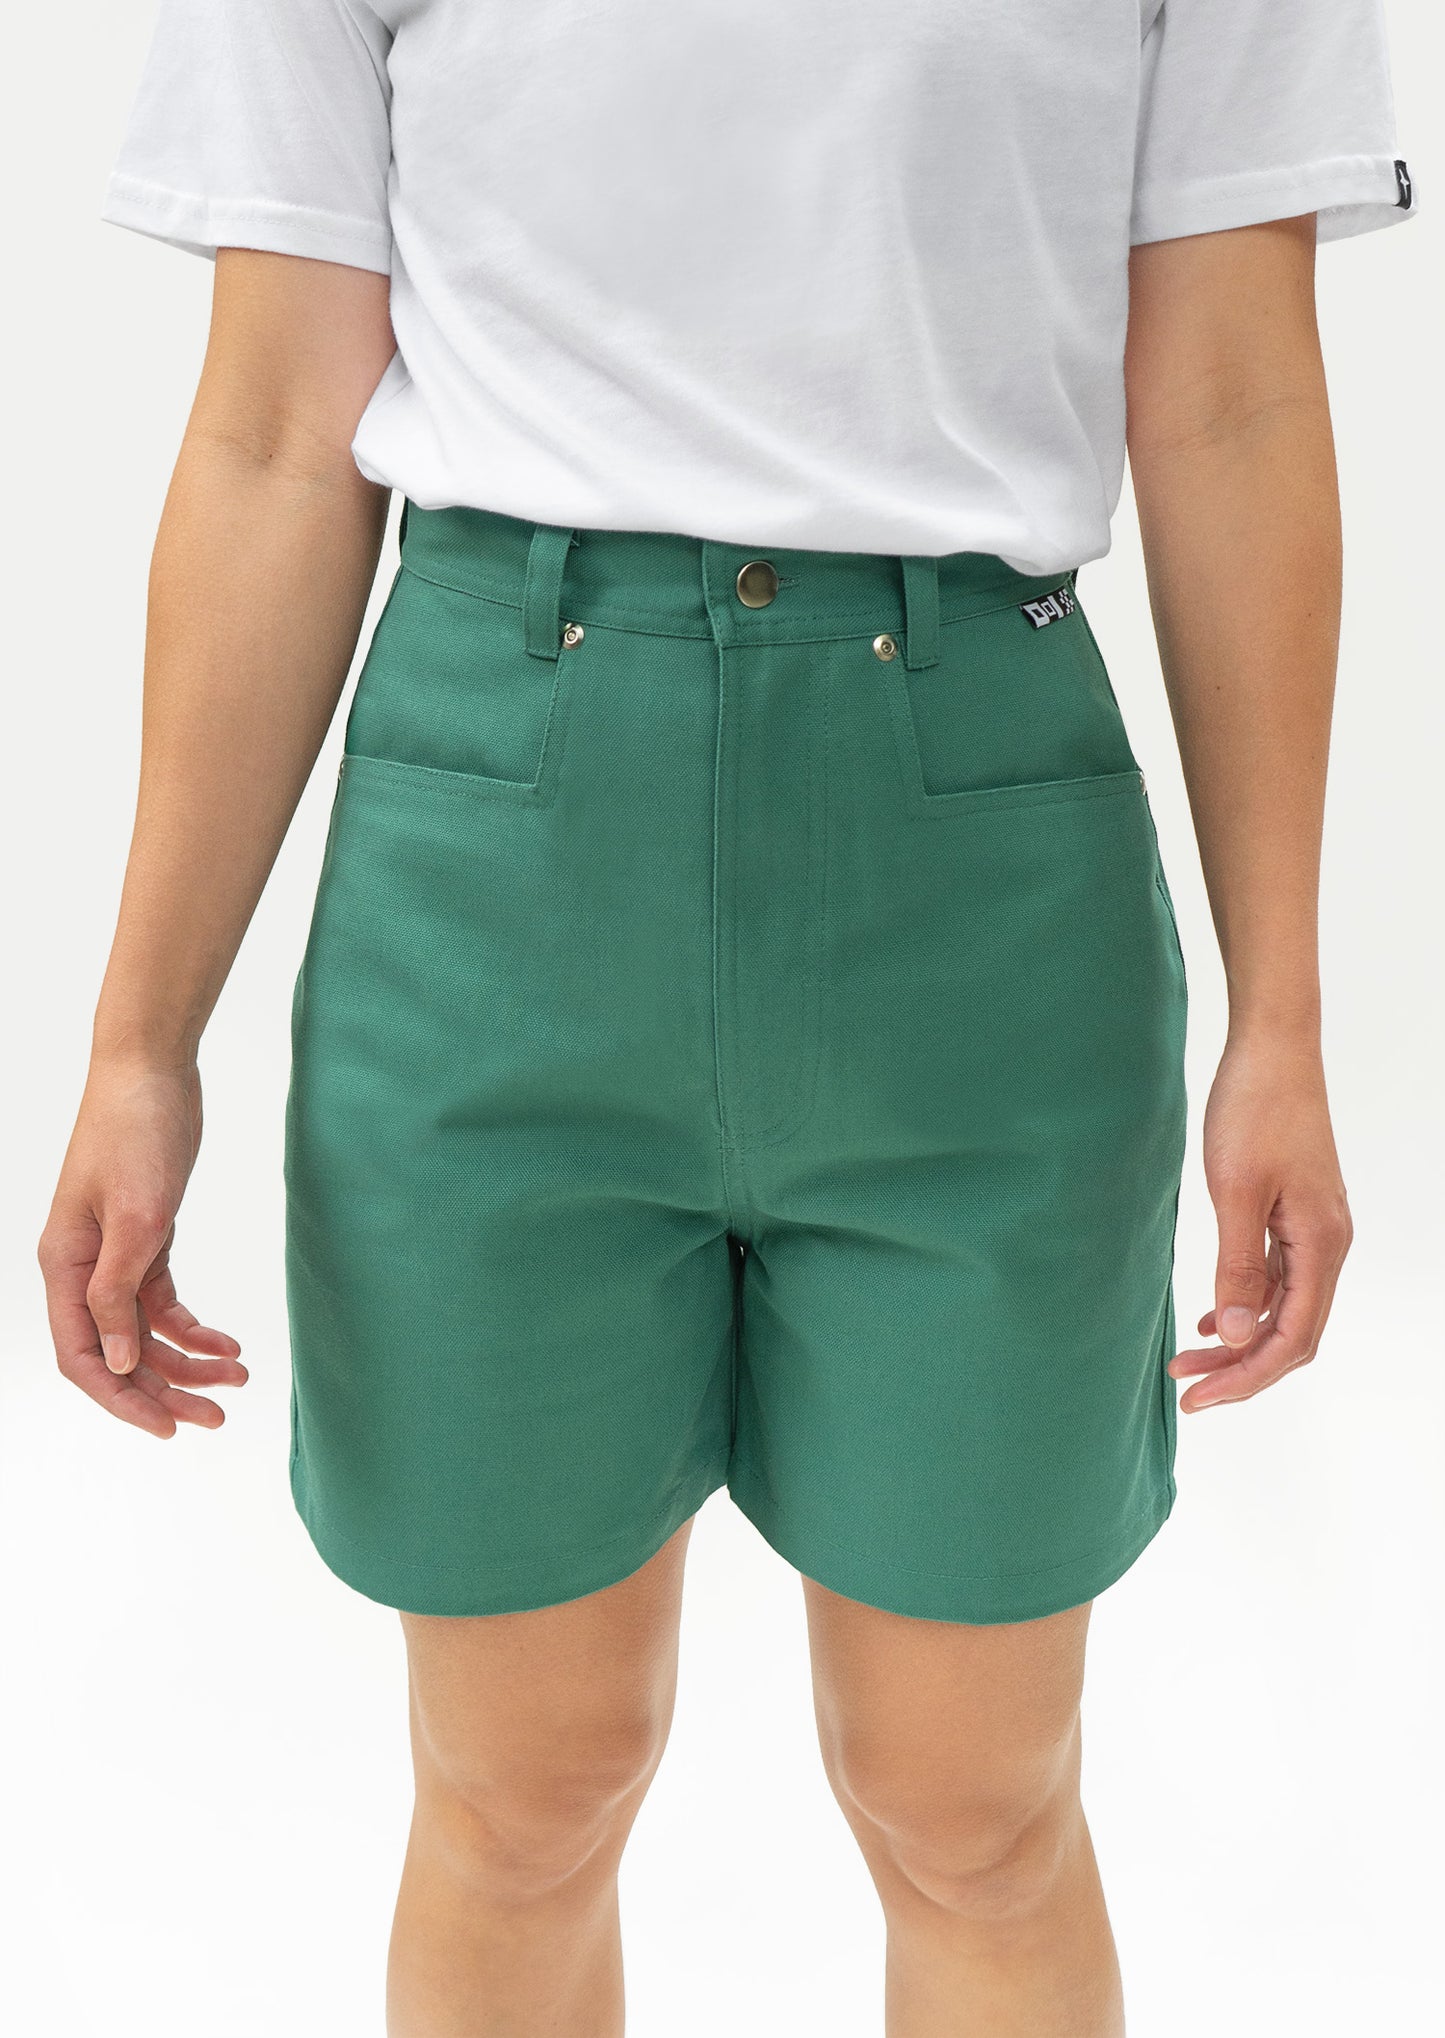 Shorts - emerald green